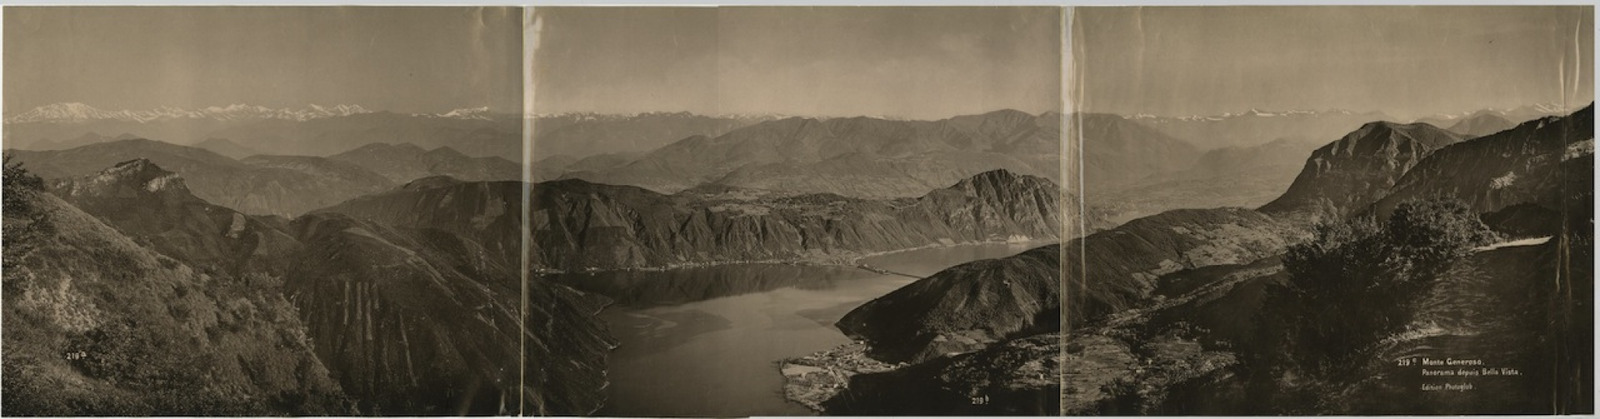 Photoglob, Switzerland, Monte Generoso, Panorama from Bella Vista vintage print, Sw